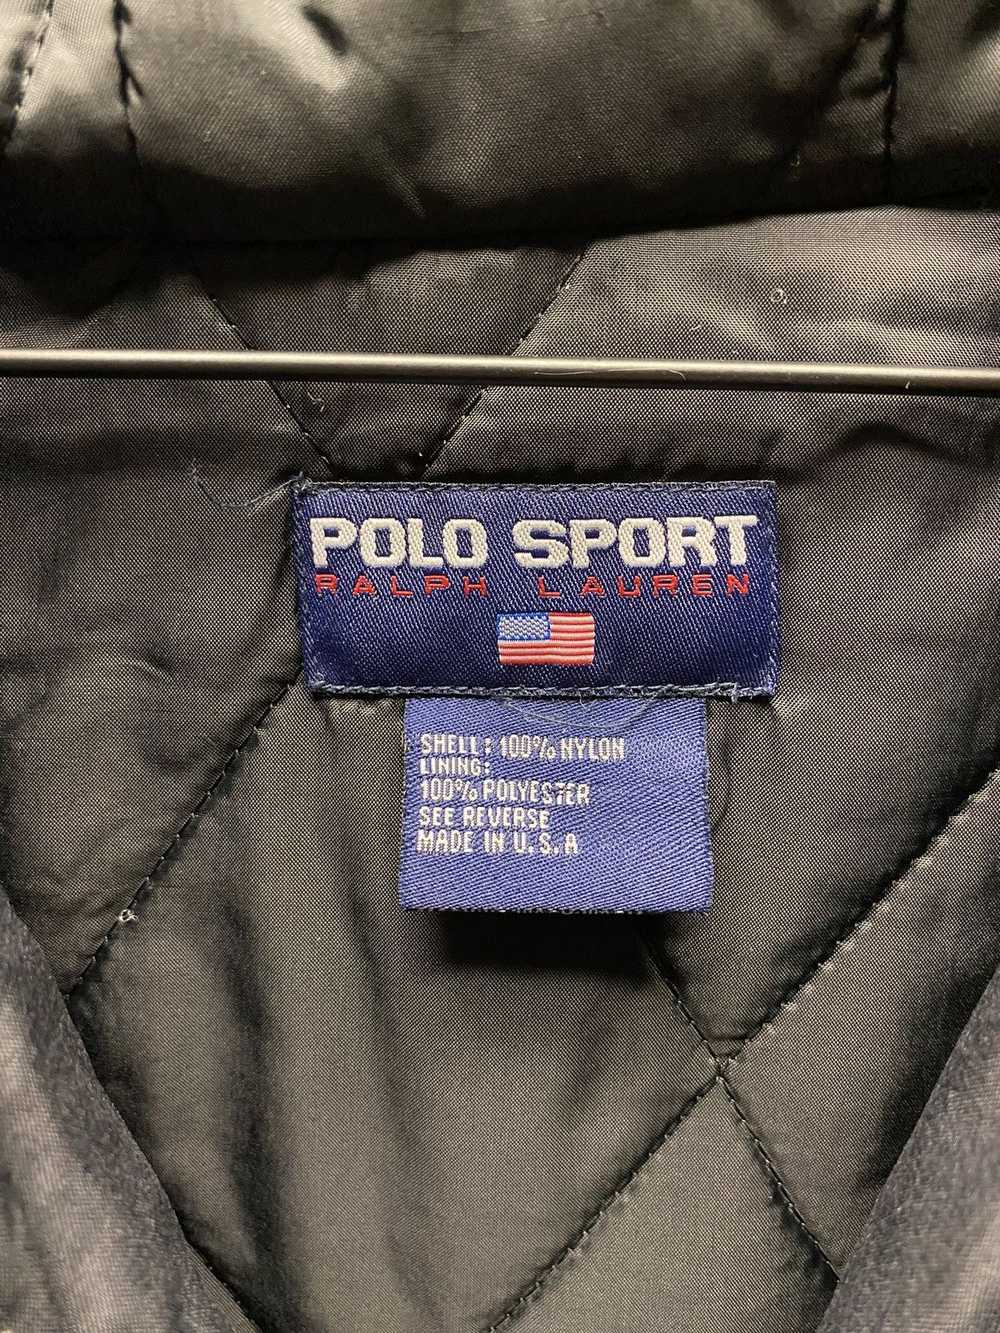 Polo Ralph Lauren Polo Sport Ralph Lauren Jacket - image 4